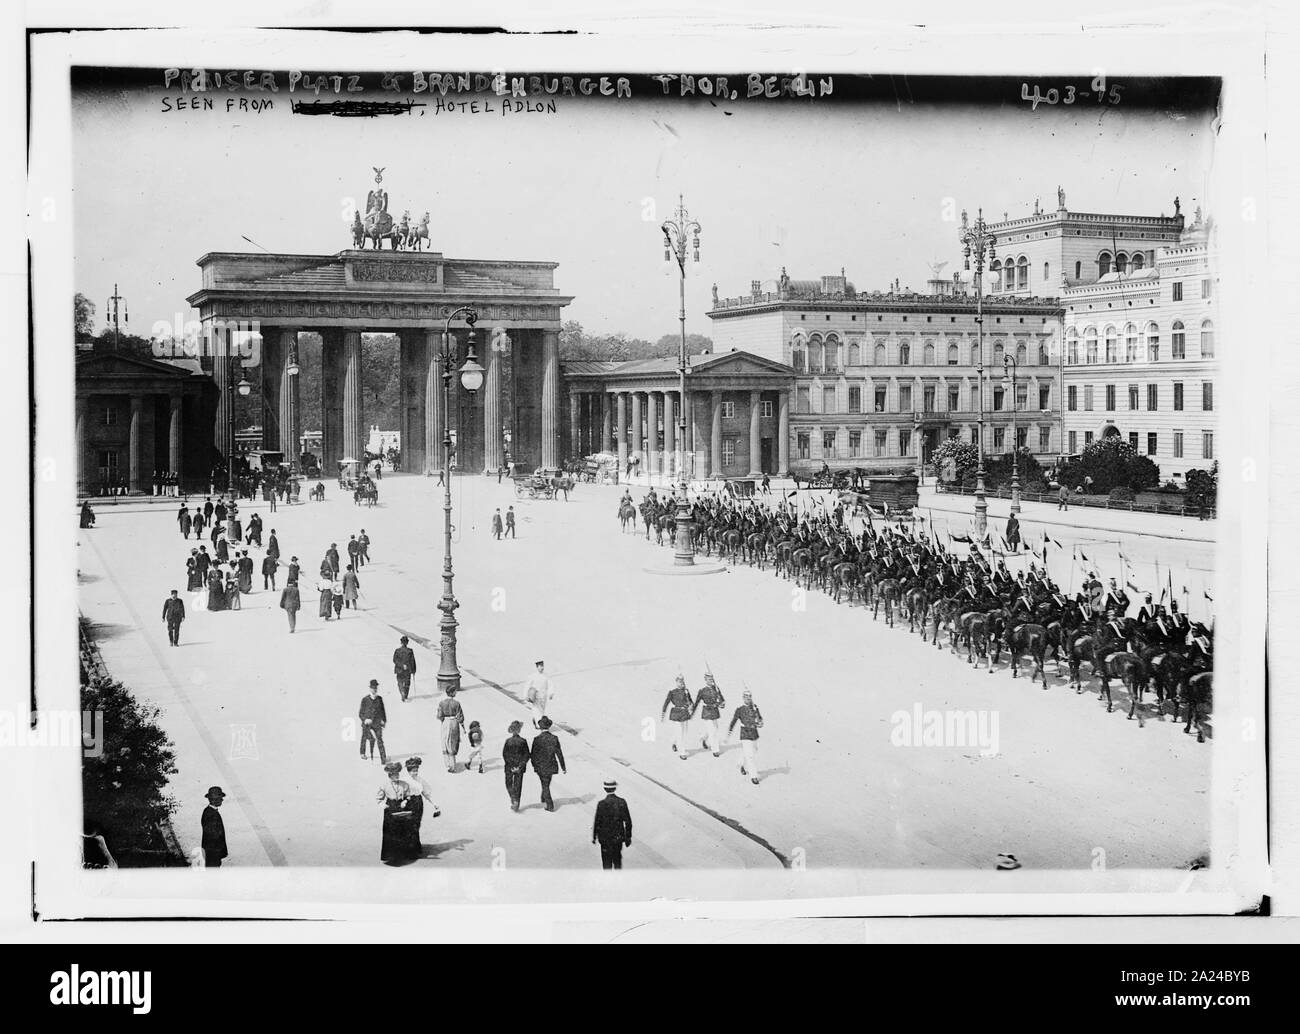 Pariser Platz and Brandenburger Thor, Berlin Paris Place and Brandenburg Gate seen from Hotel Adlon Stock Photo